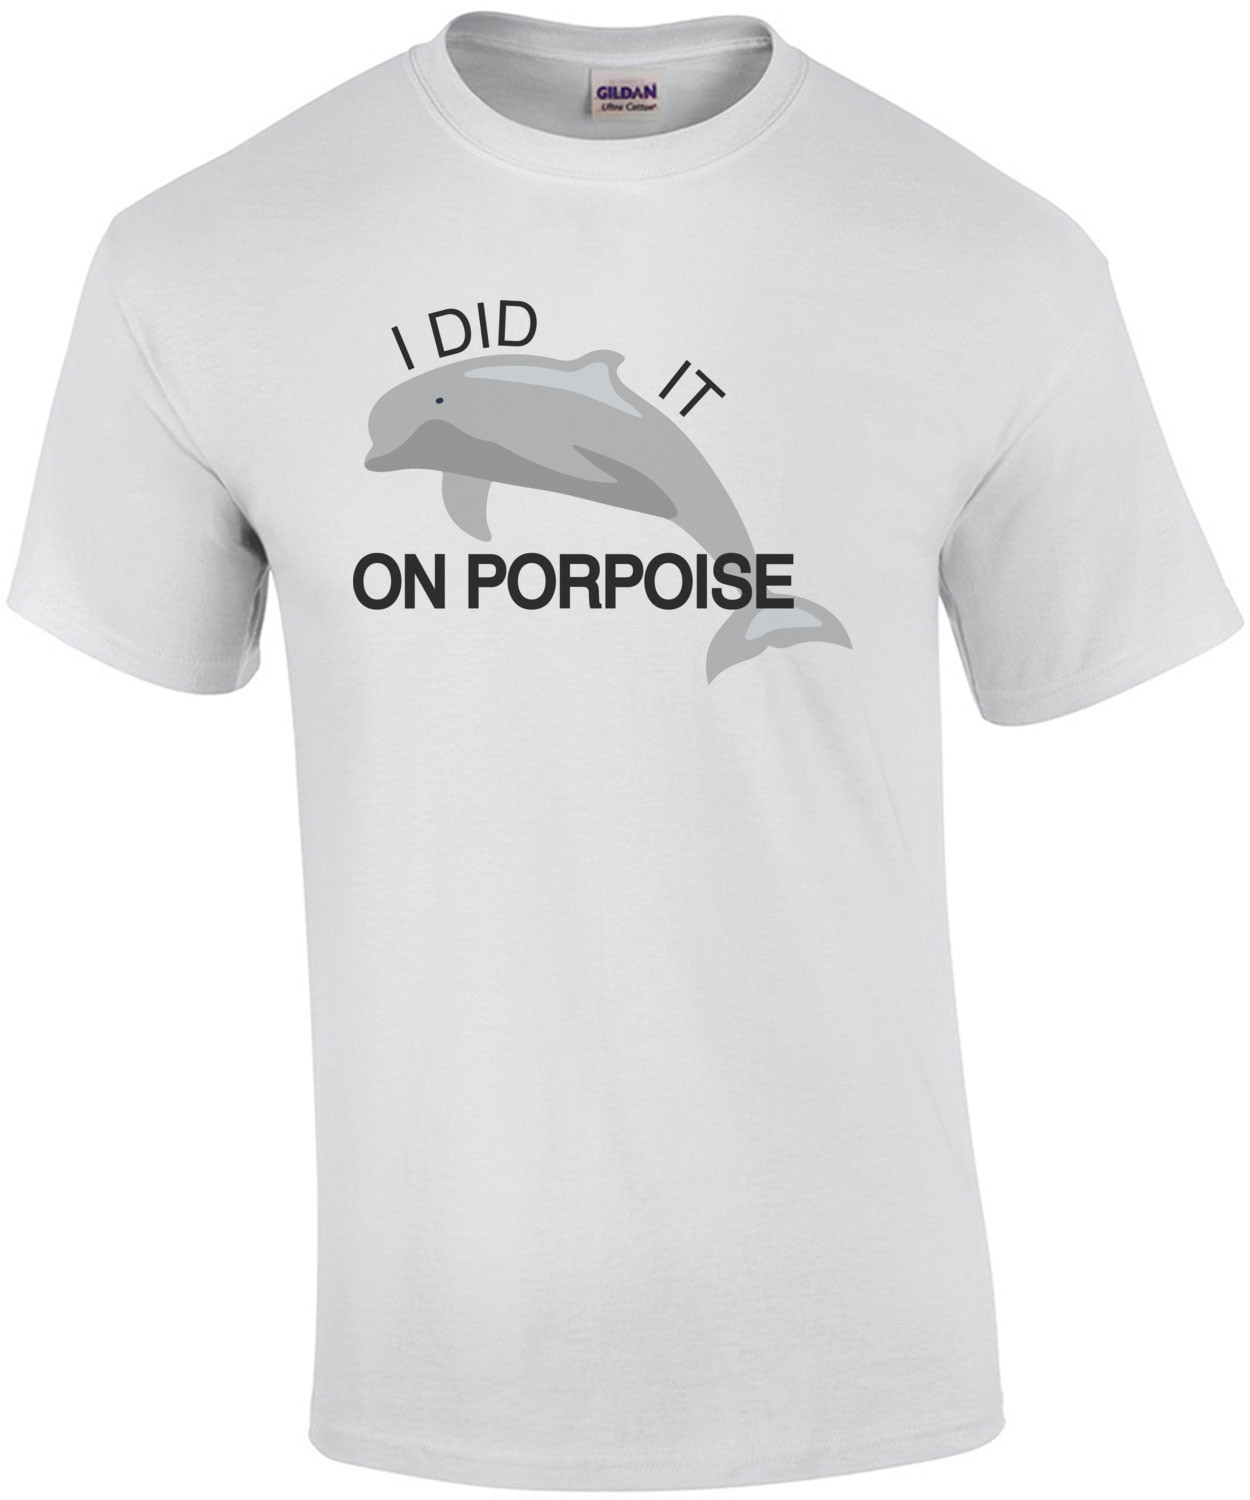 I did it on porpoise Pun T-Shirt